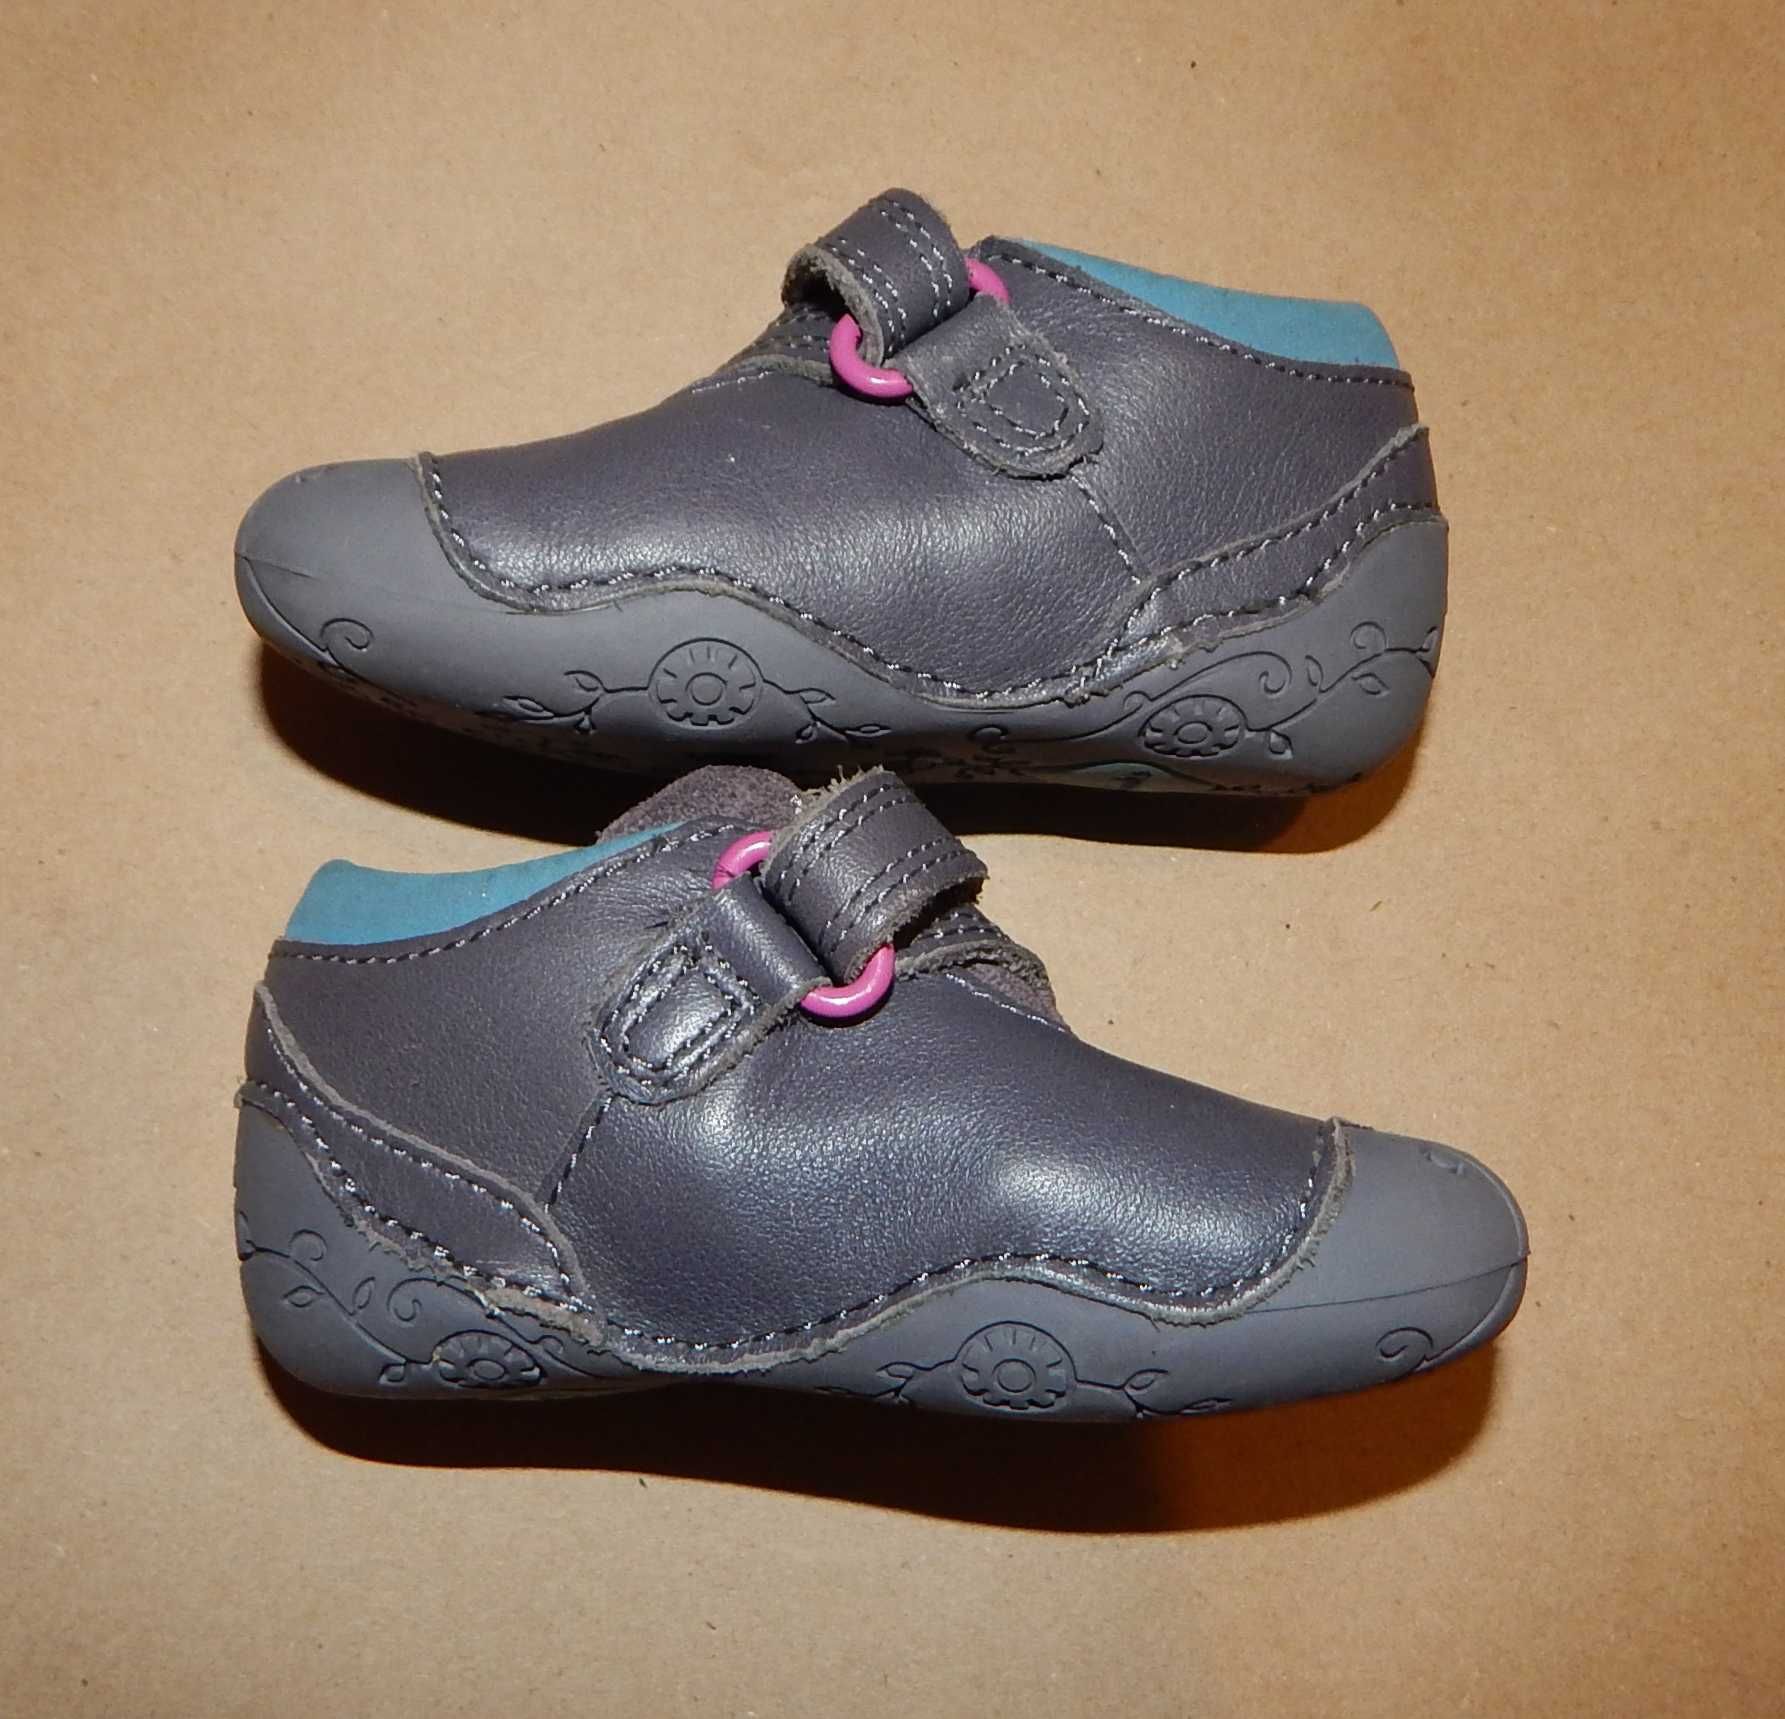 Pantofi Clarks First Shoes pentru bebe, noi fara eticheta, numarul 17